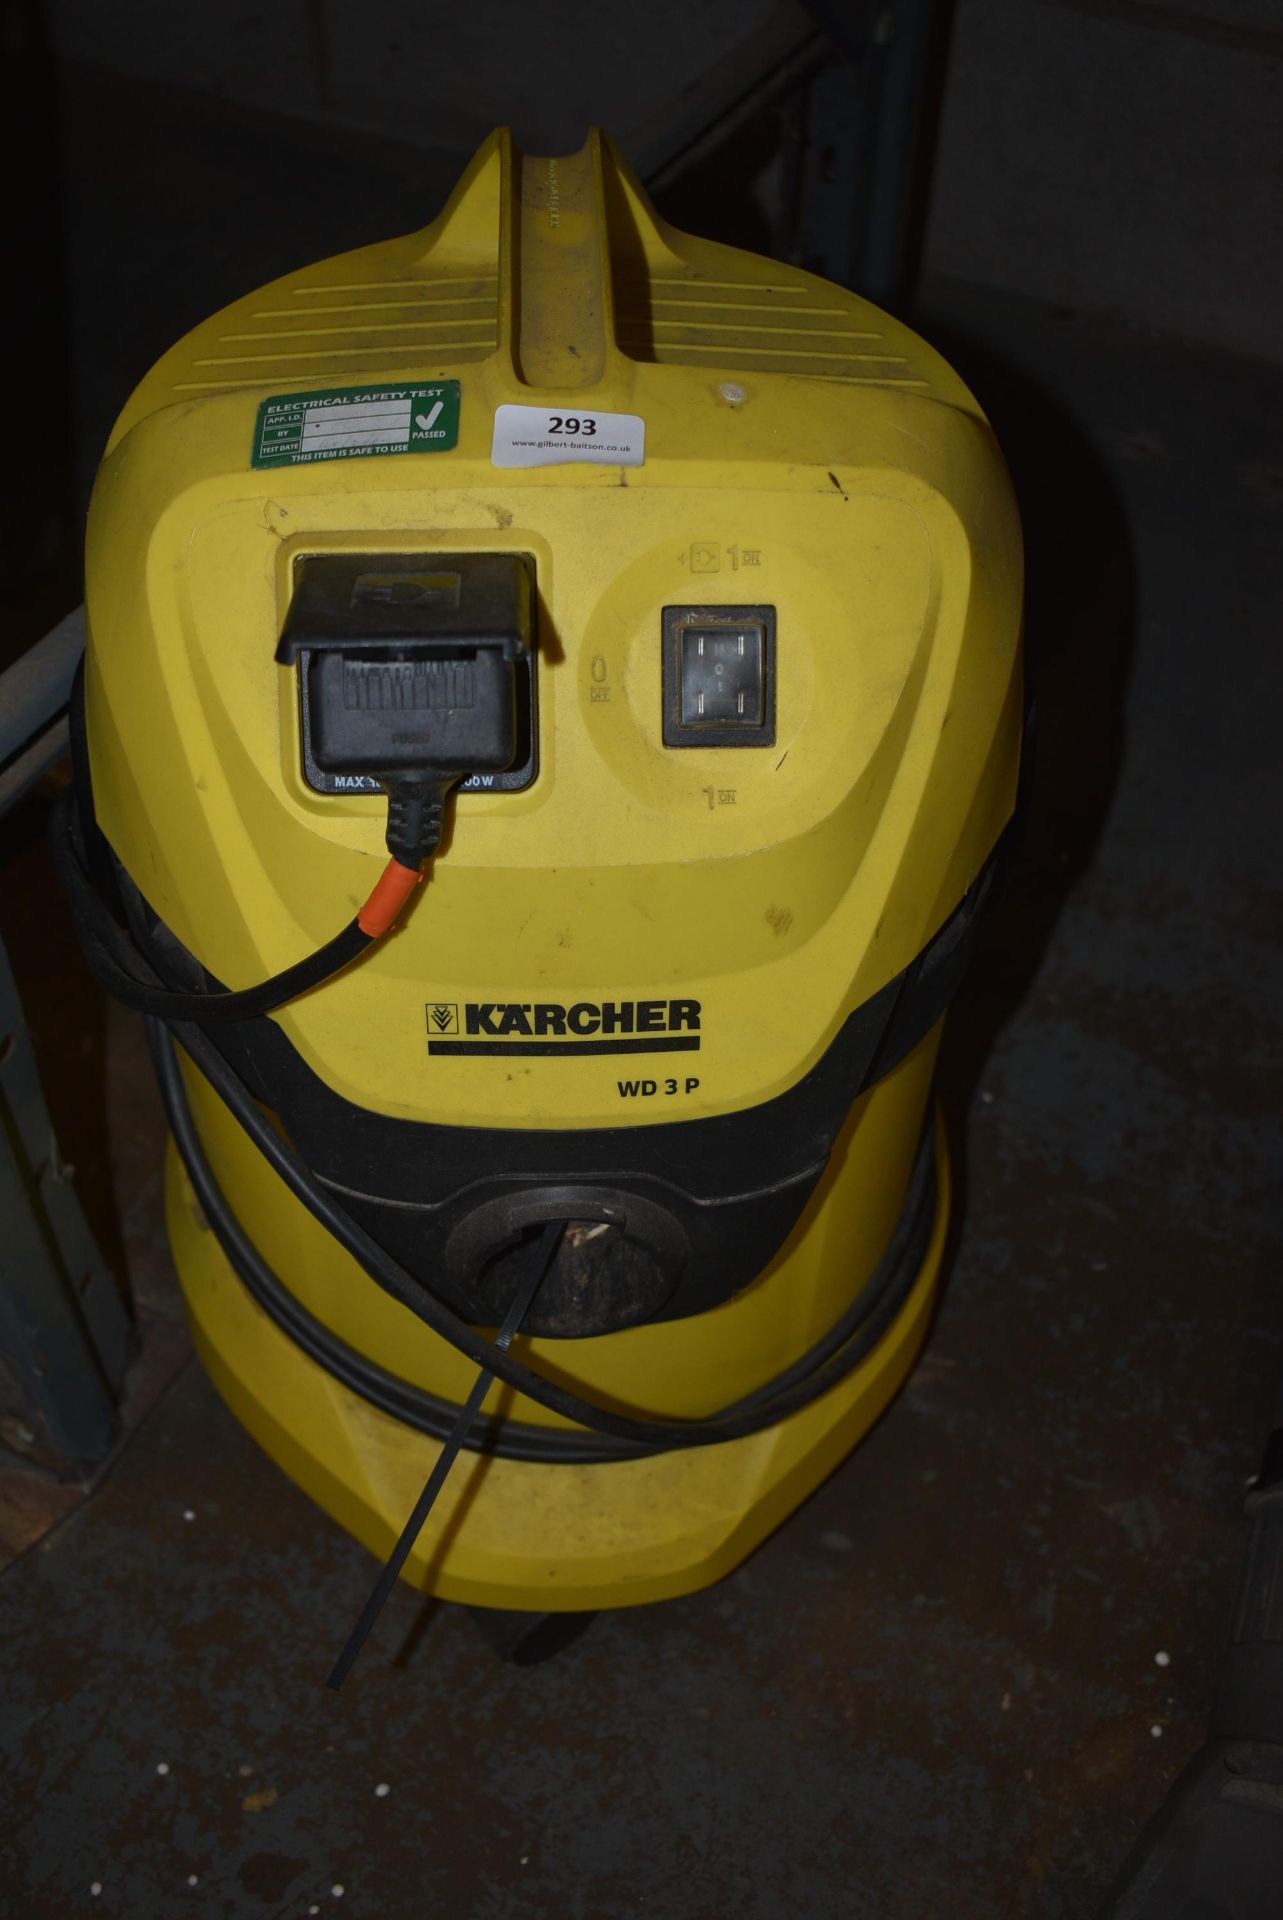 *Karcher WD3P Wet & Dry Vacuum Cleaner